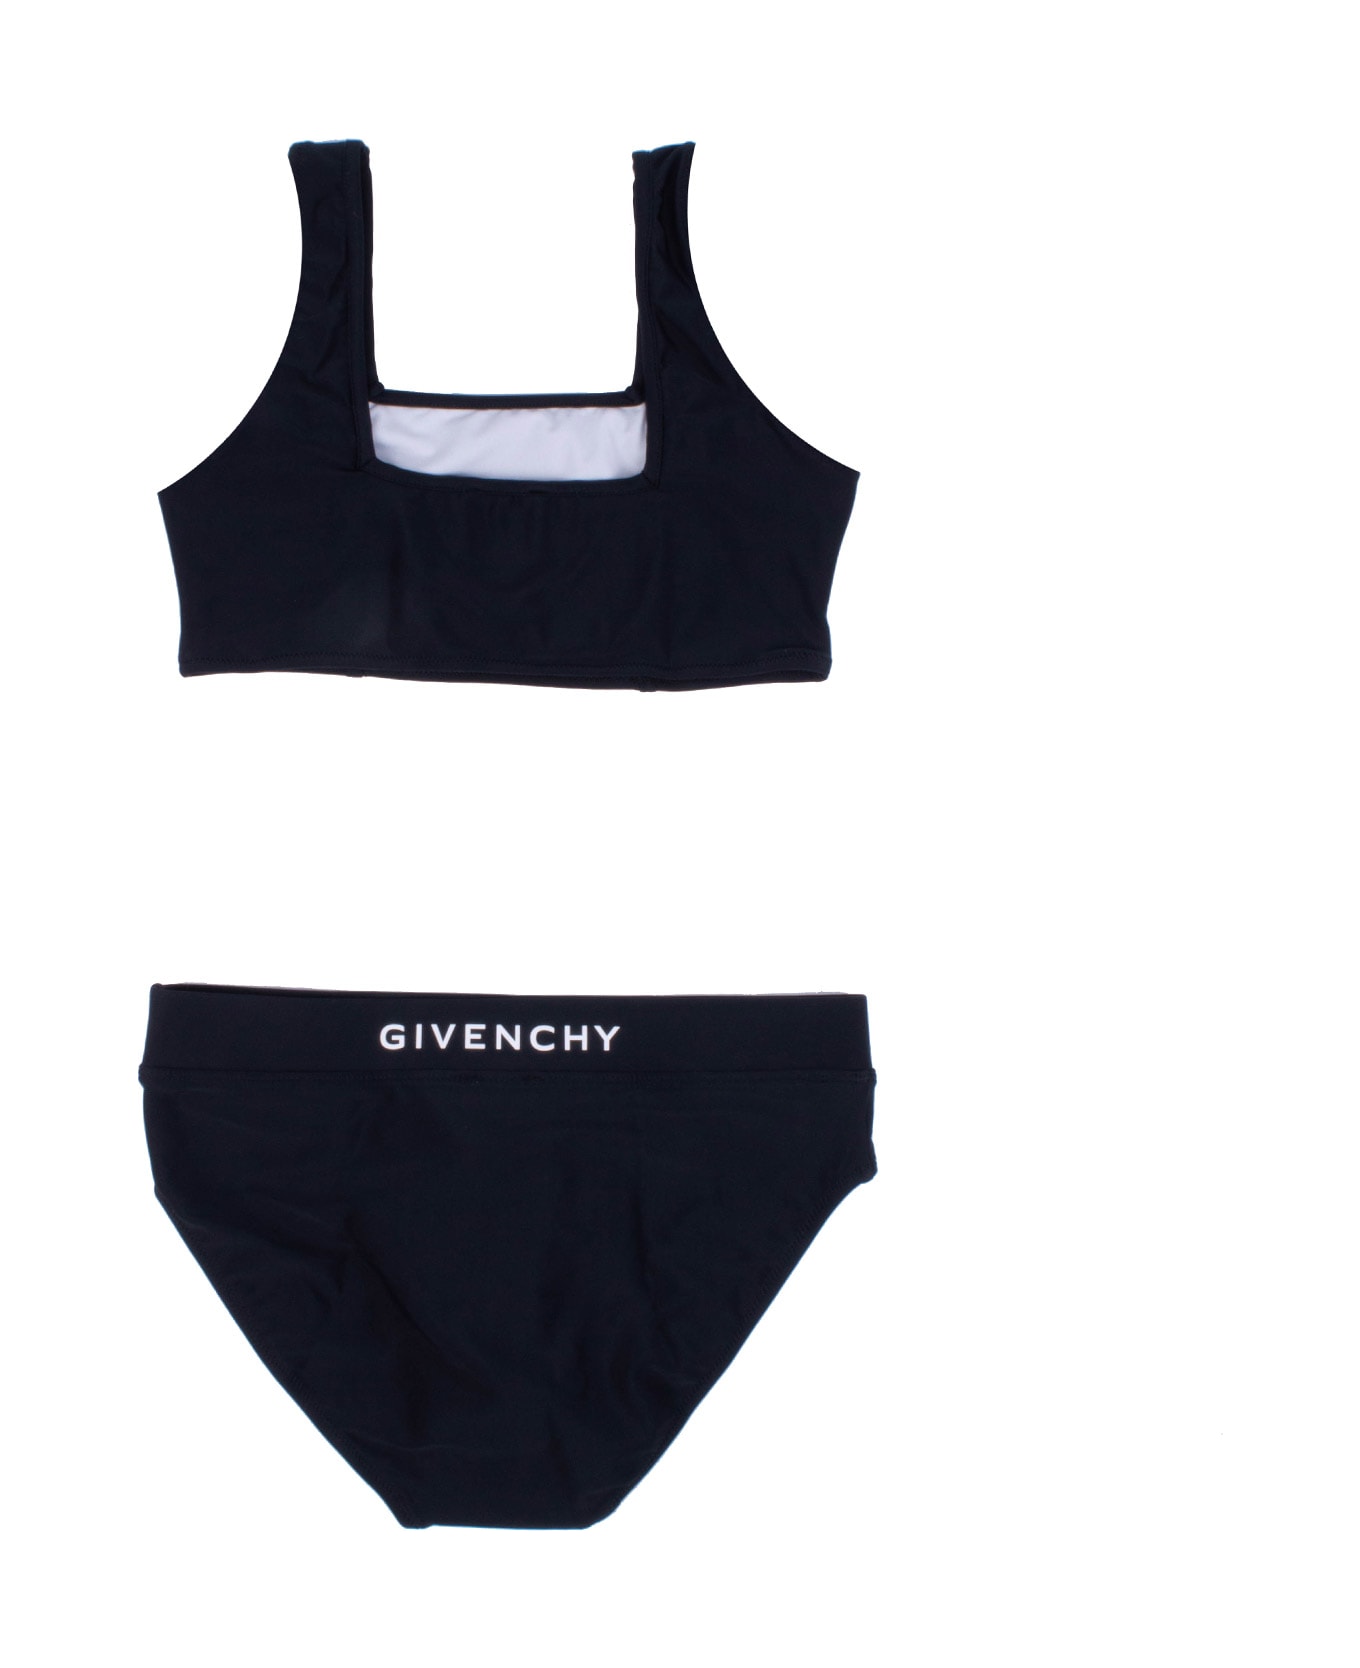 Givenchy Bikini With Logo - Back